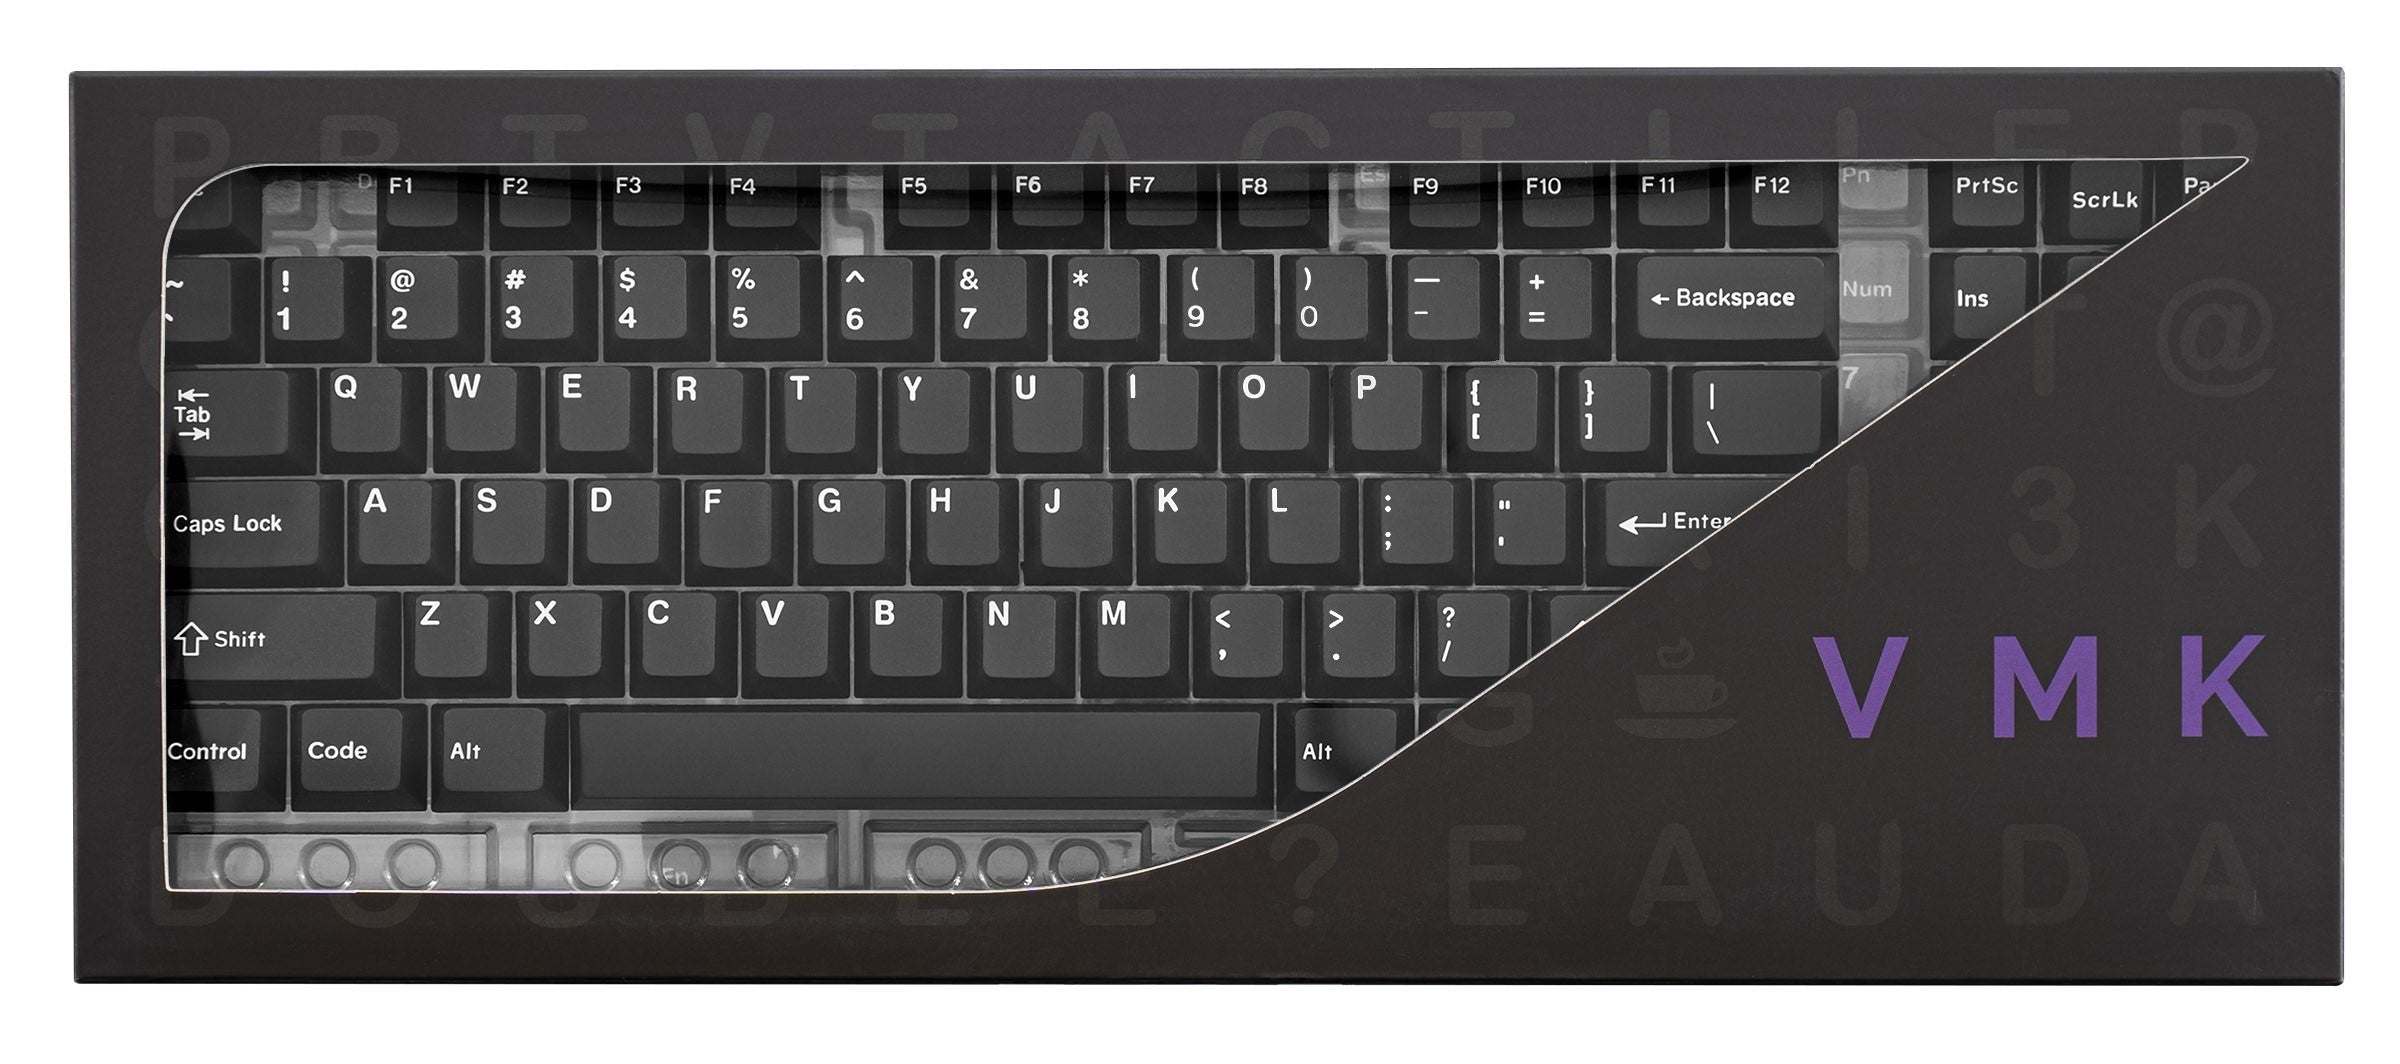 124 Keys Lotus Keycap Set OEM Profile PBT Keycaps Dye Sub Keycap for Cherry  Mx Gateron Kailh Switch Mechanical Keyboard 